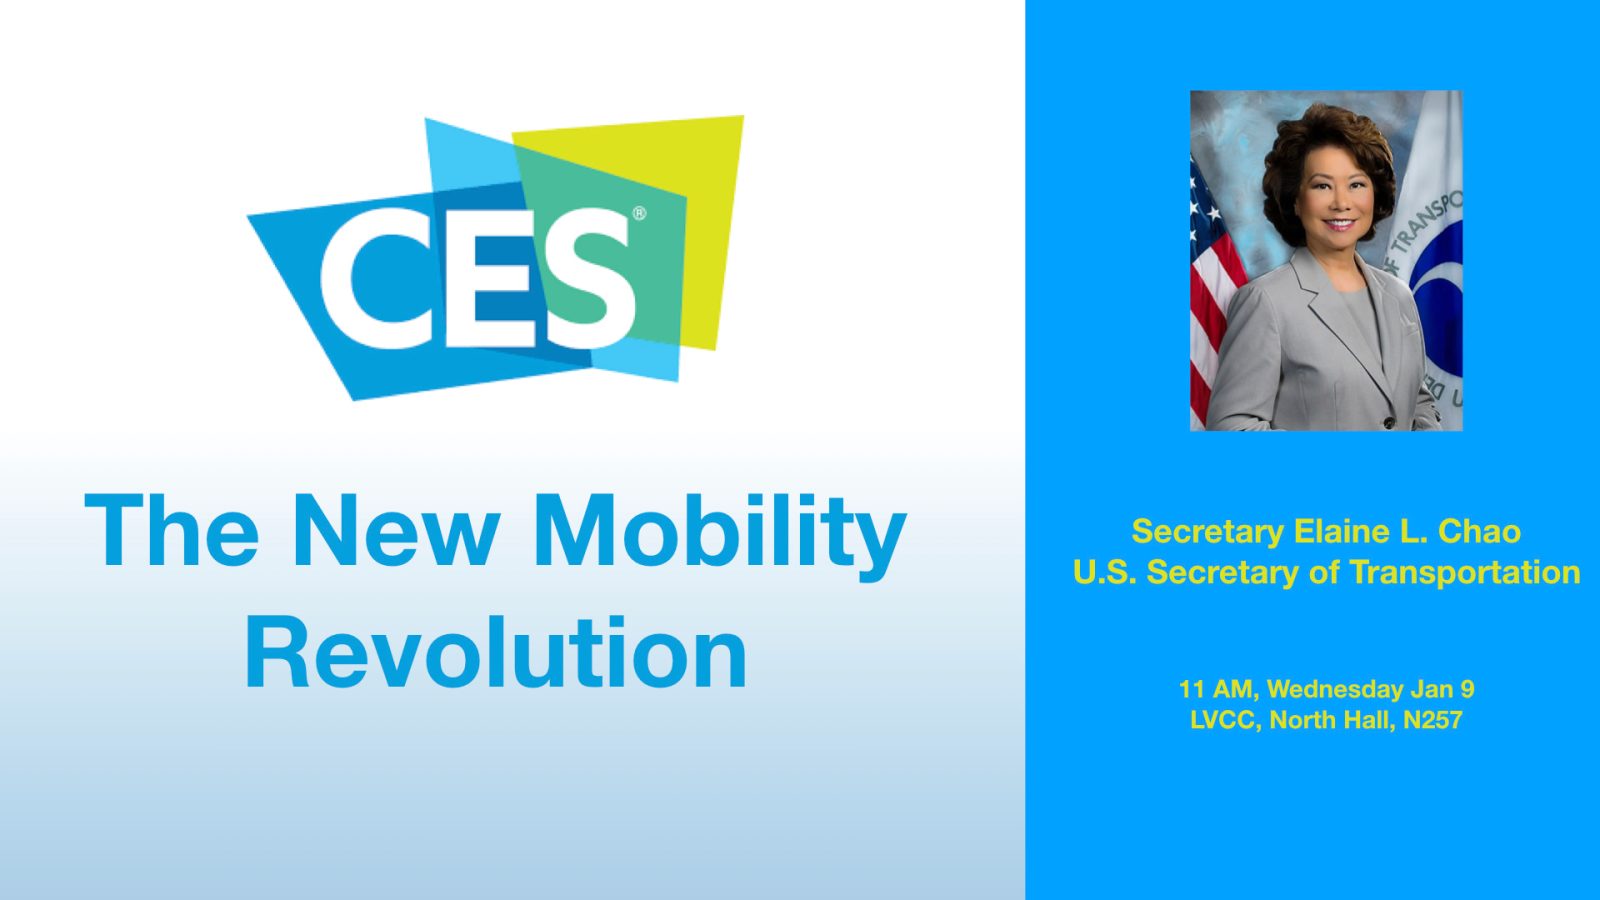 U.S. Secretary of Transportation Elaine L. Chao to deliver CES 2019 Keynote